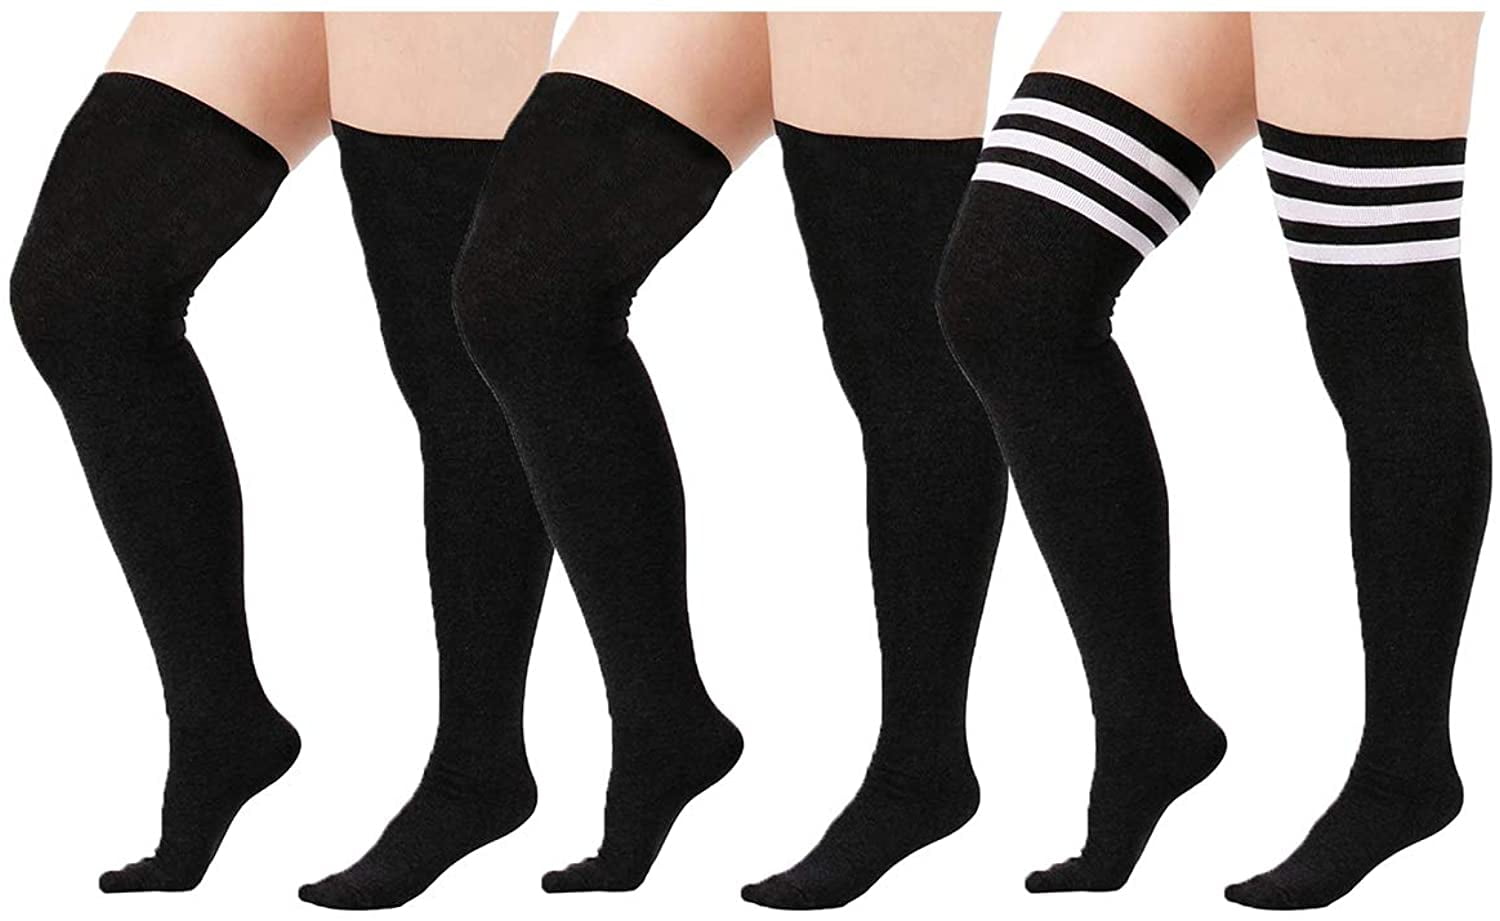 Zando Knee High Socks for Women Sport Thin Tube Socks Casual Thigh High Socks for Thick Thighs Outdoor Athletic Socks 